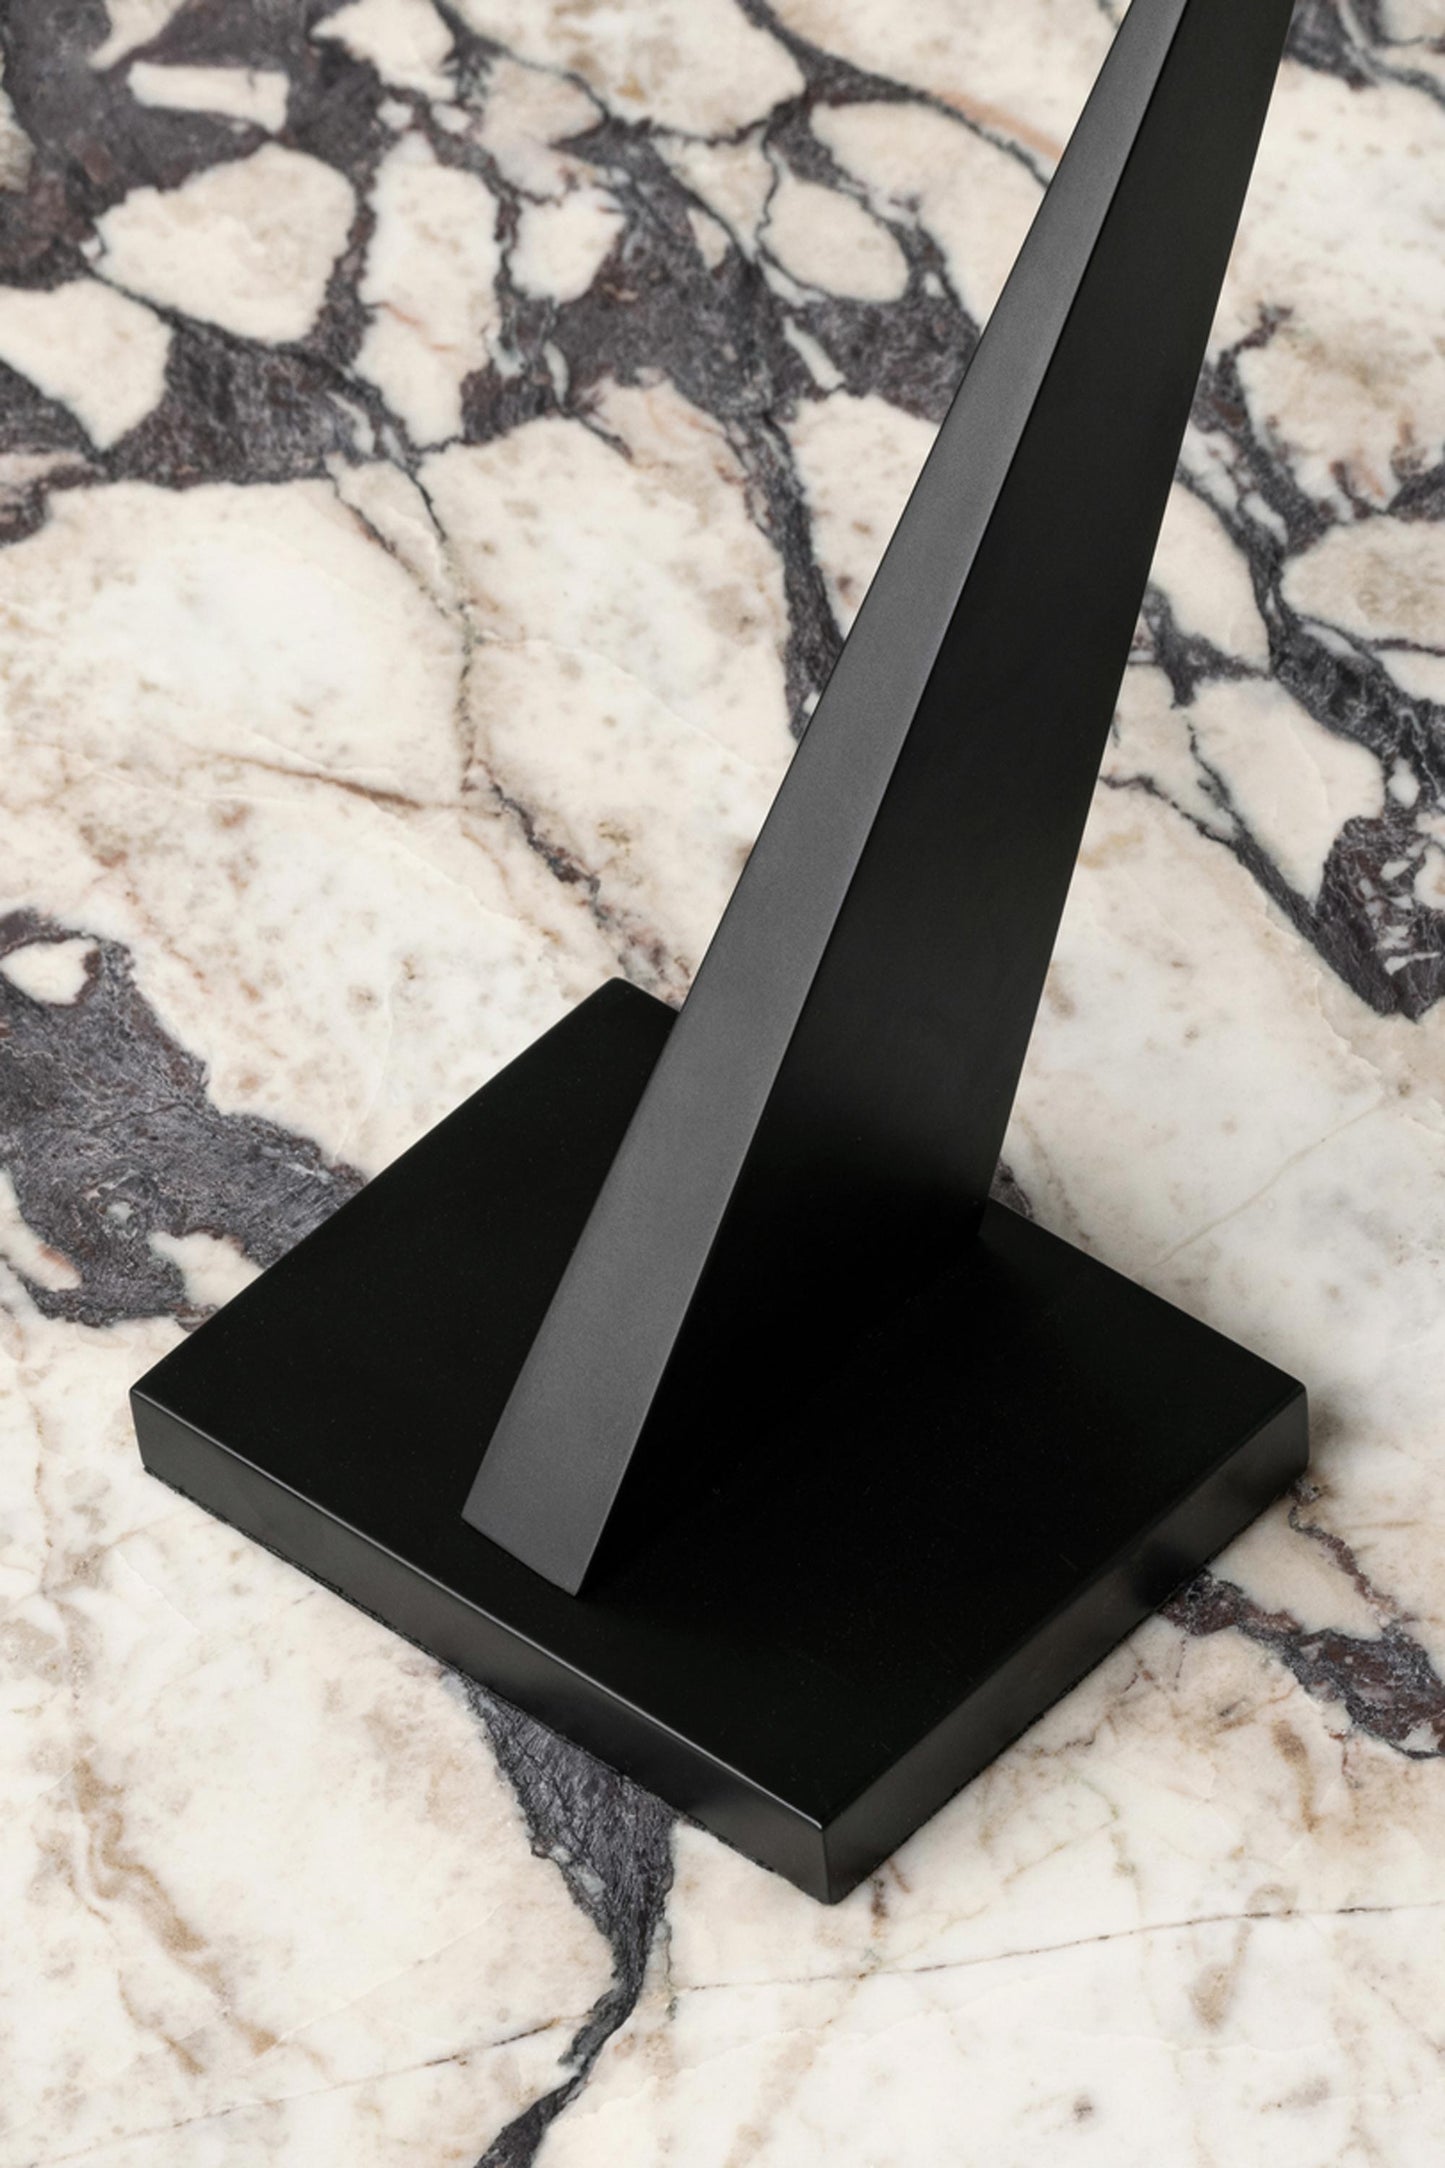 Details Interconnect Candleholder By Colin King Sculpture Black Steel Balance